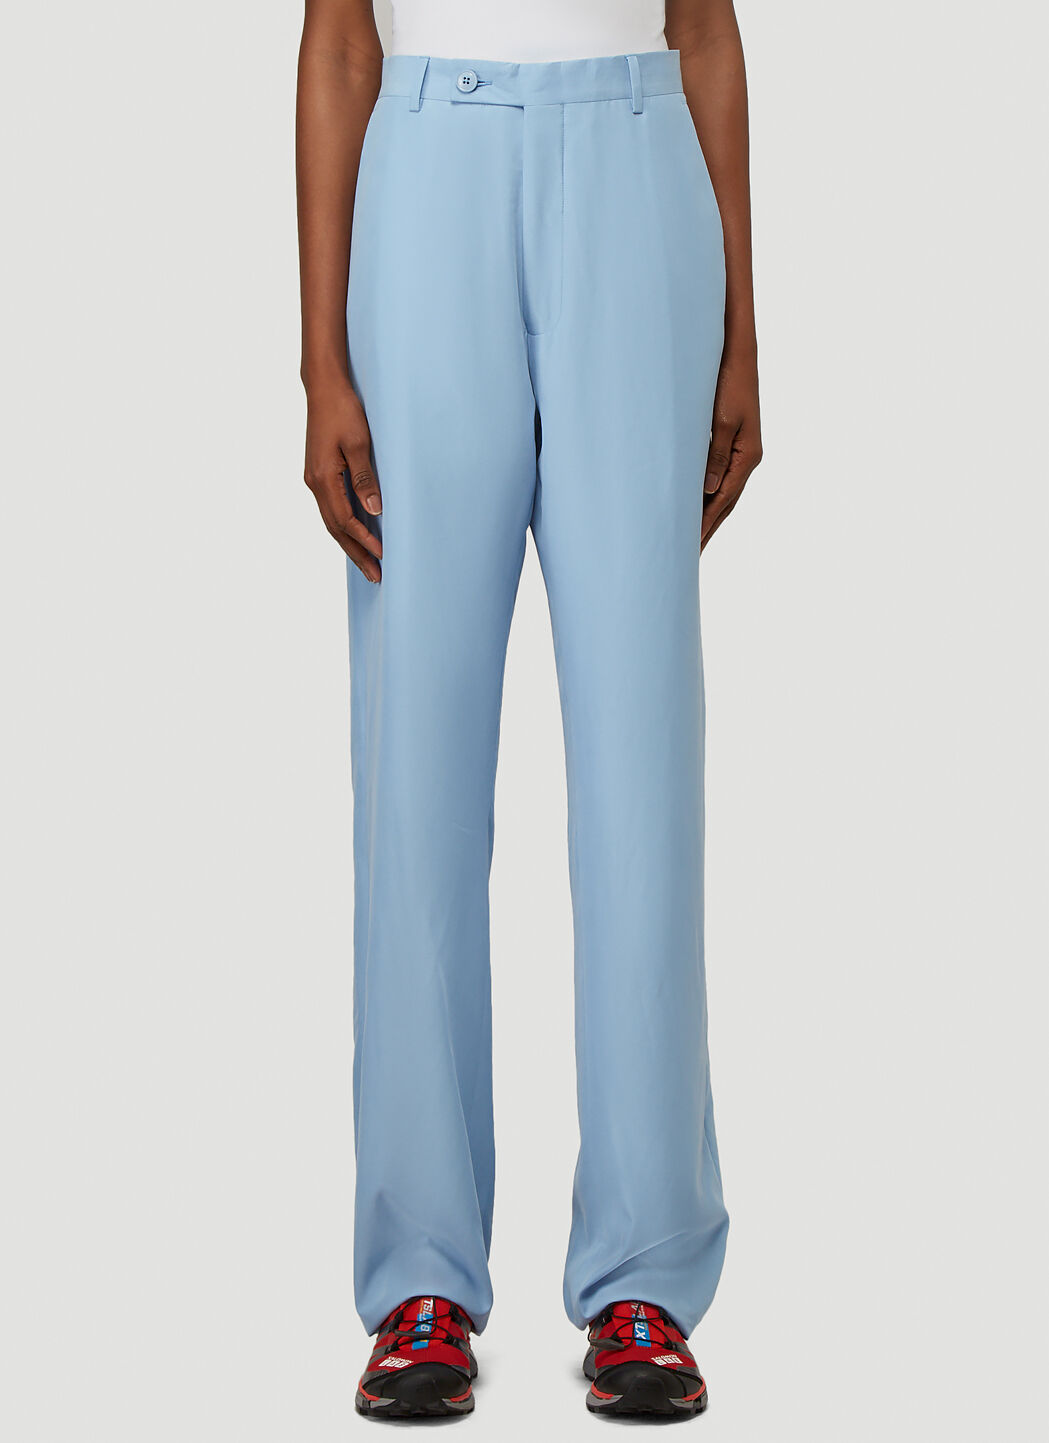 Maisie Wilen Tailored Pants Blue mwn0244004